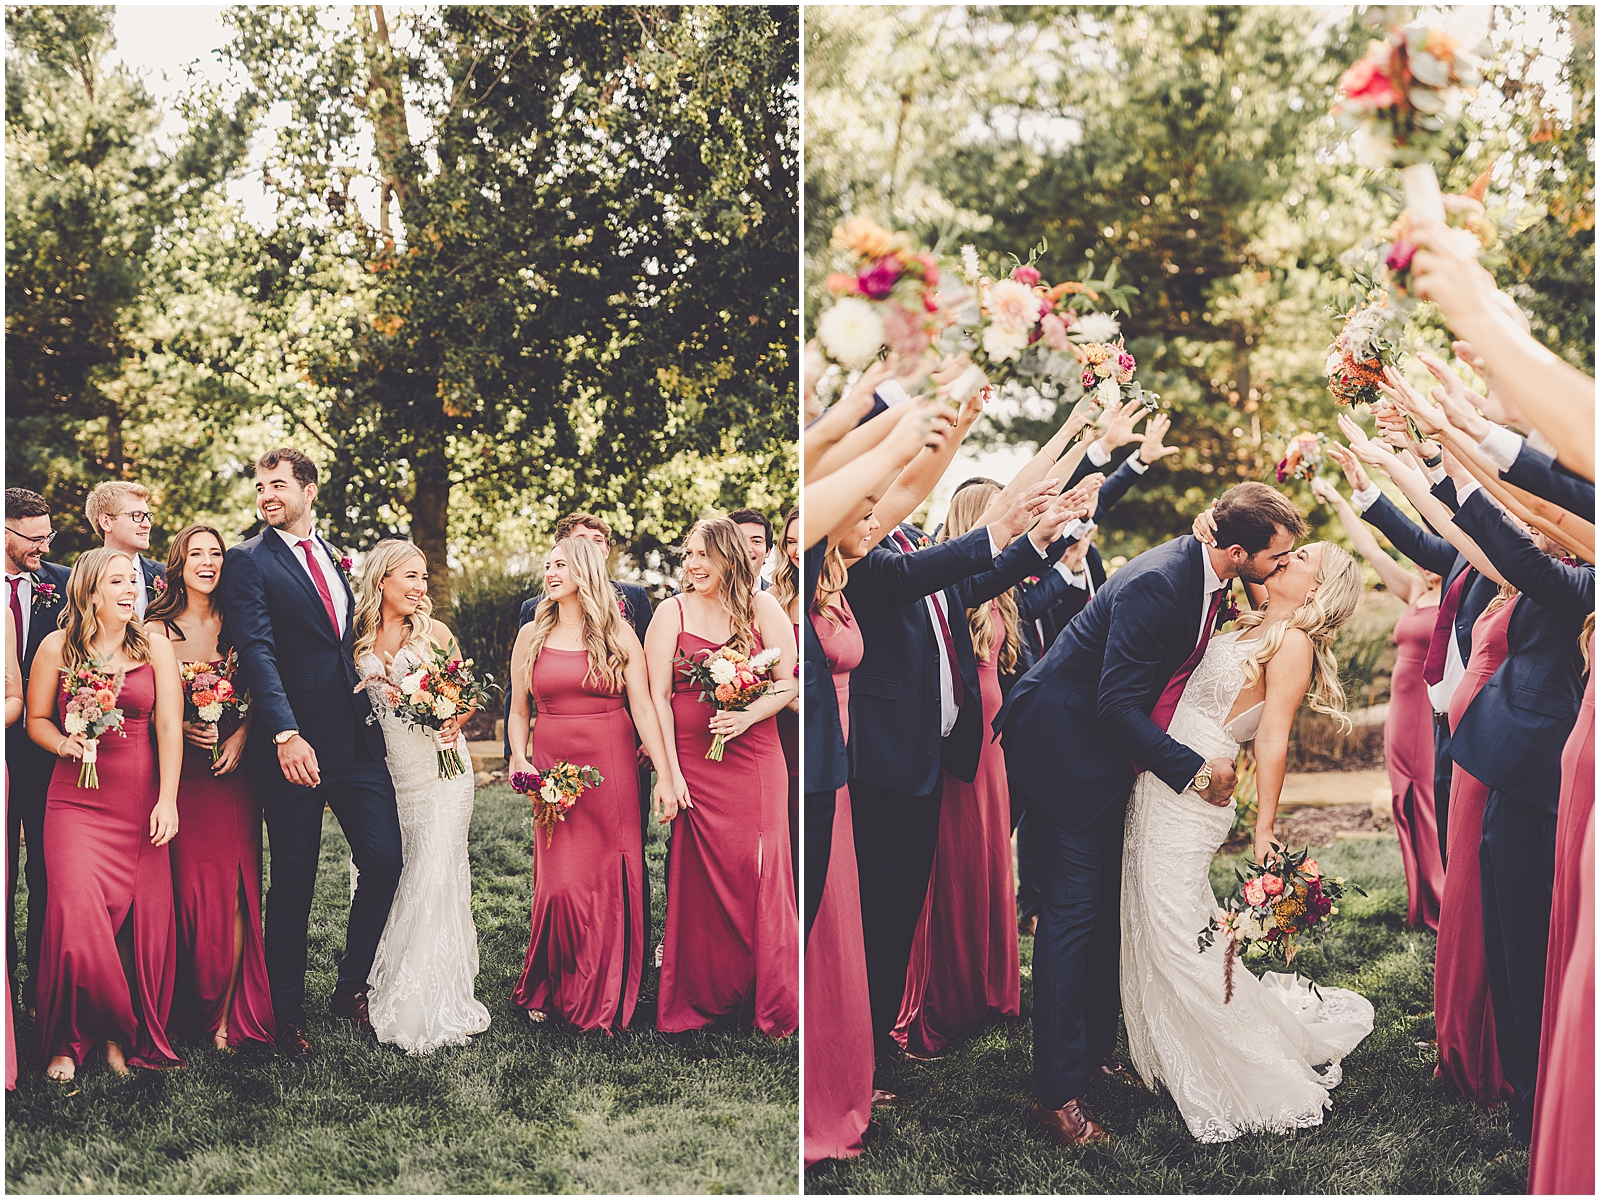 Makenzie & Ashton's fall Pear Tree Estate wedding day in Champaign, Illinois with Chicagoland wedding photographer Kara Evans Photographer.